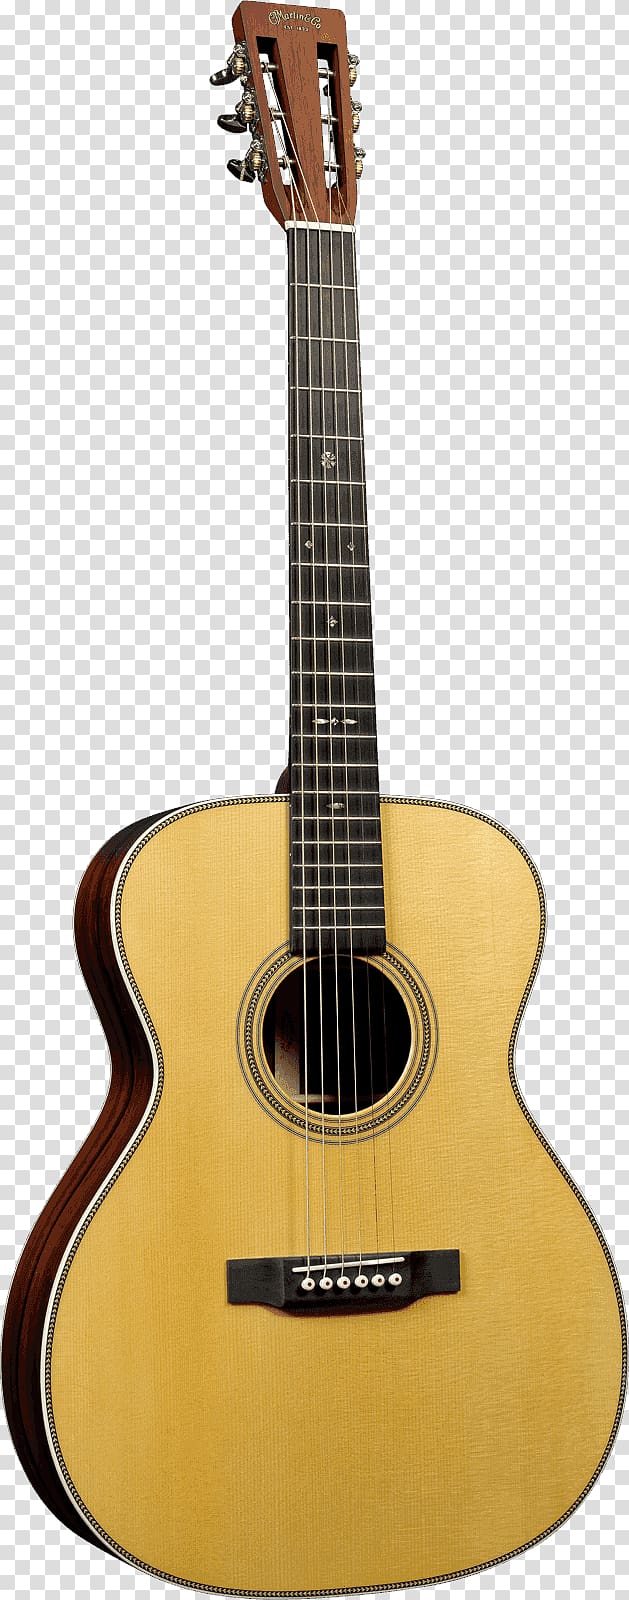 Steel-string acoustic guitar Parlor guitar C. F. Martin & Company, folk-custom transparent background PNG clipart